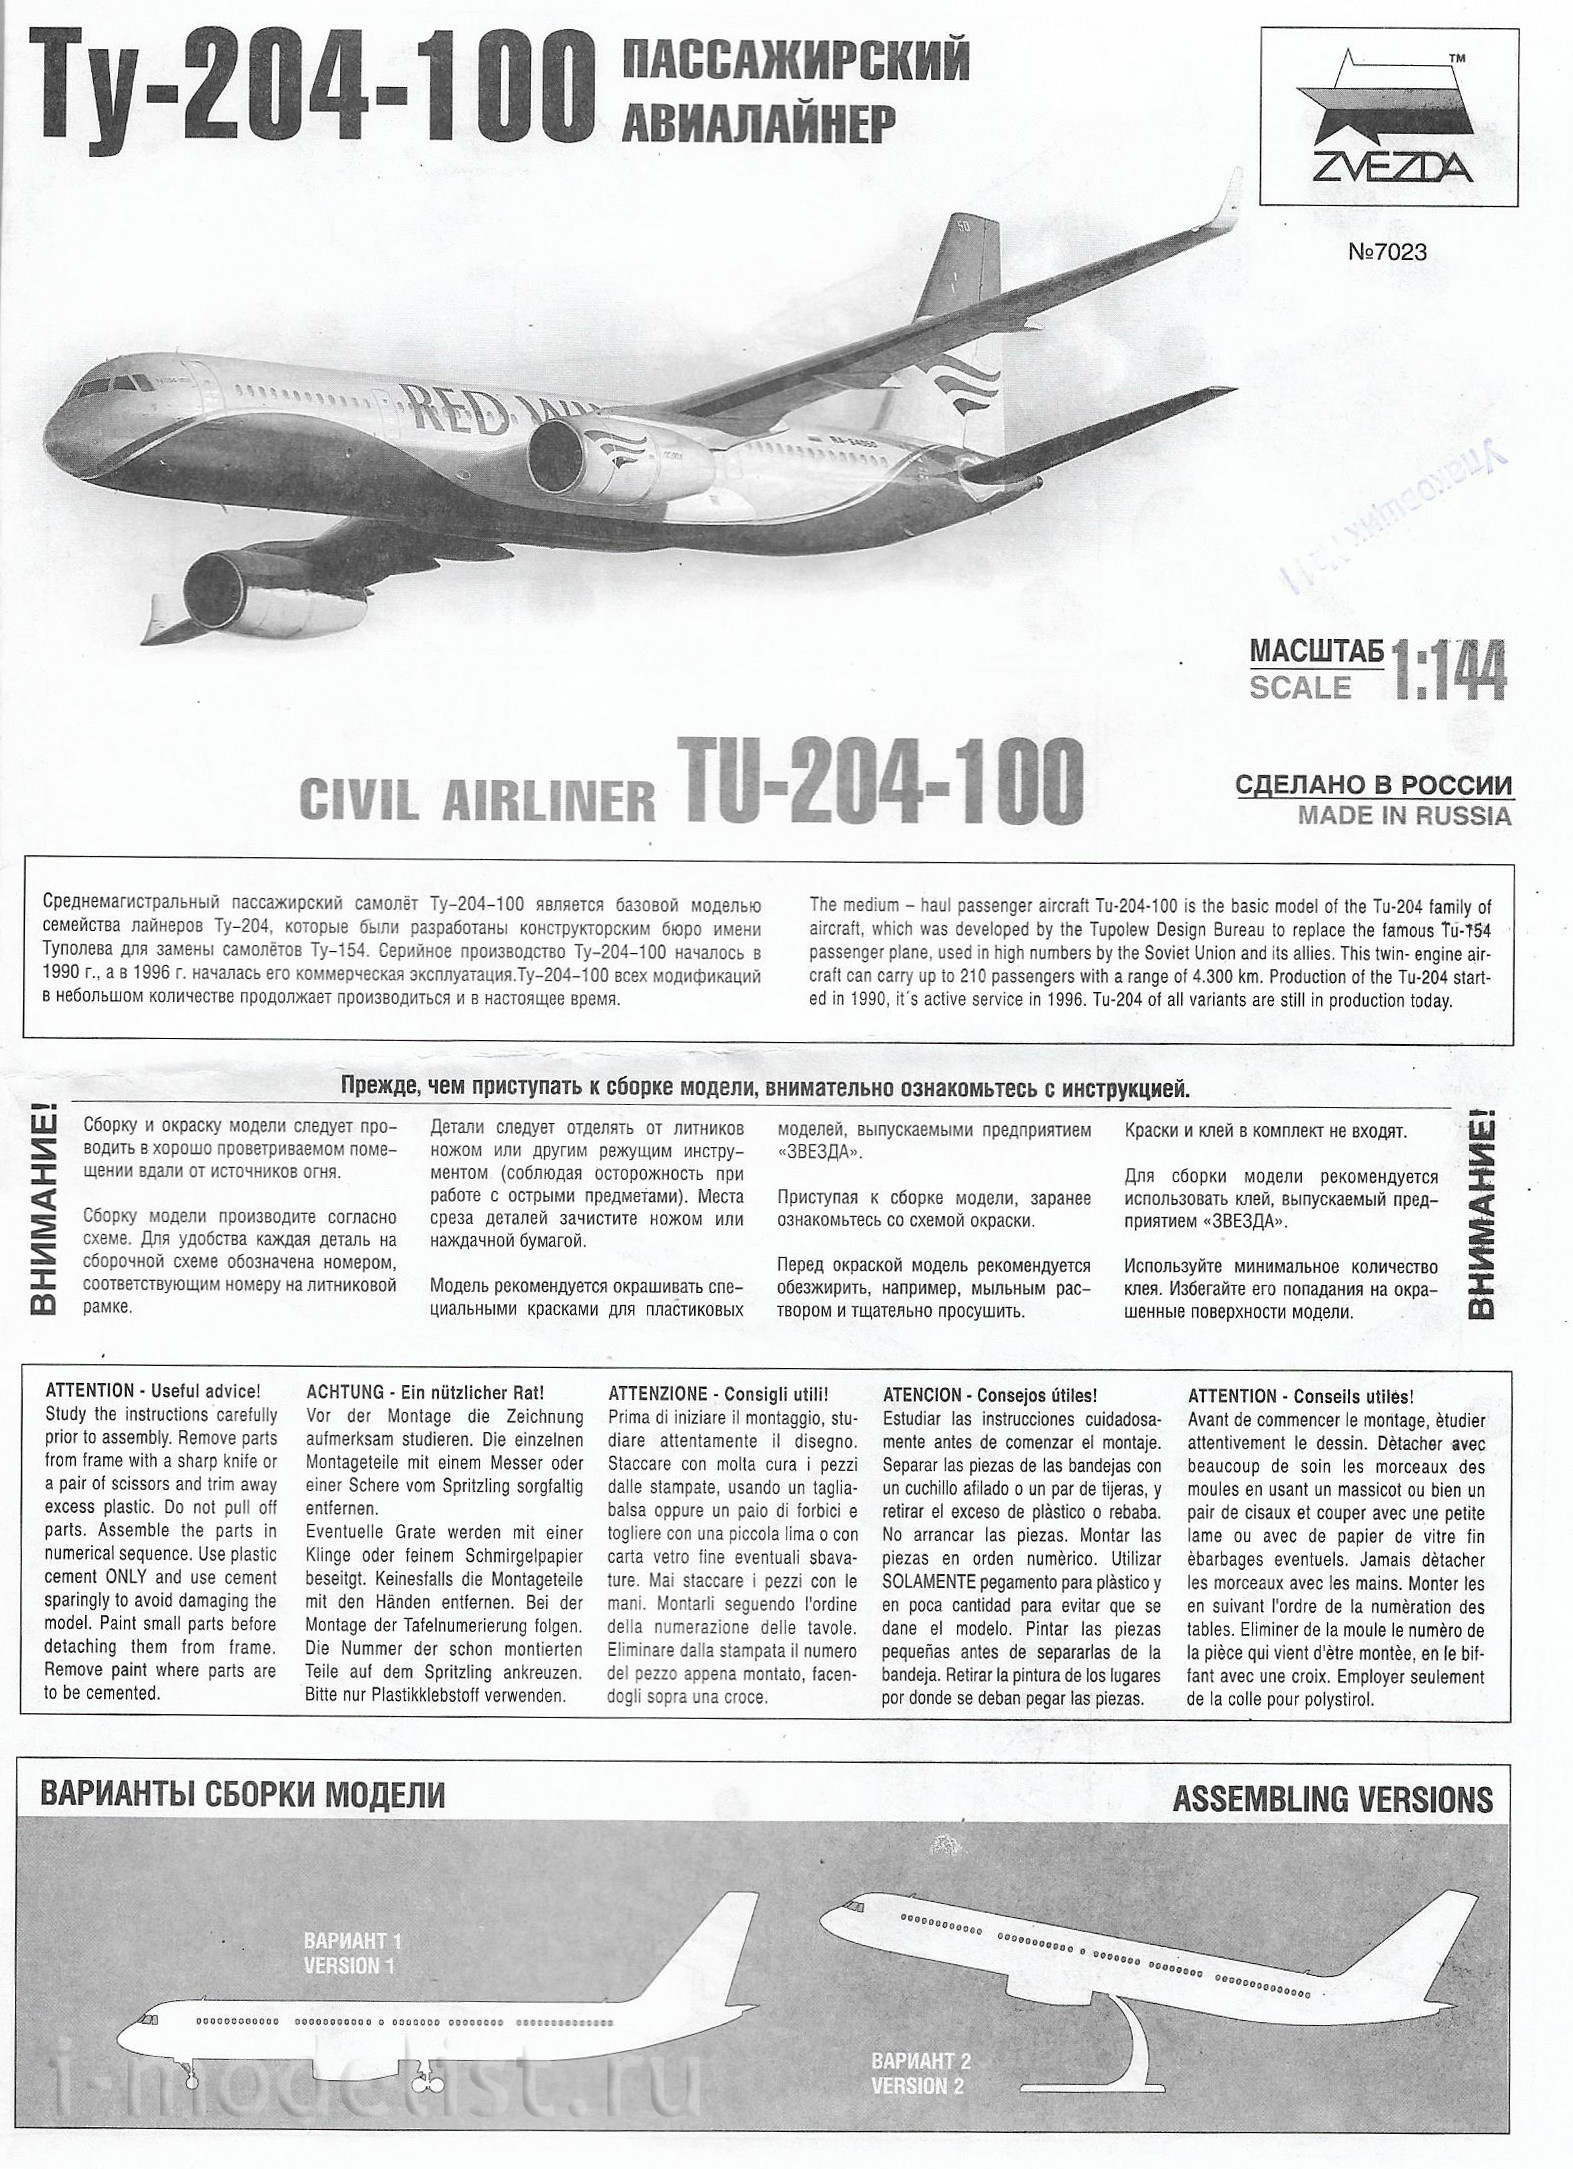 7023 Zvezda 1/144 Passenger airliner Tu-204-100